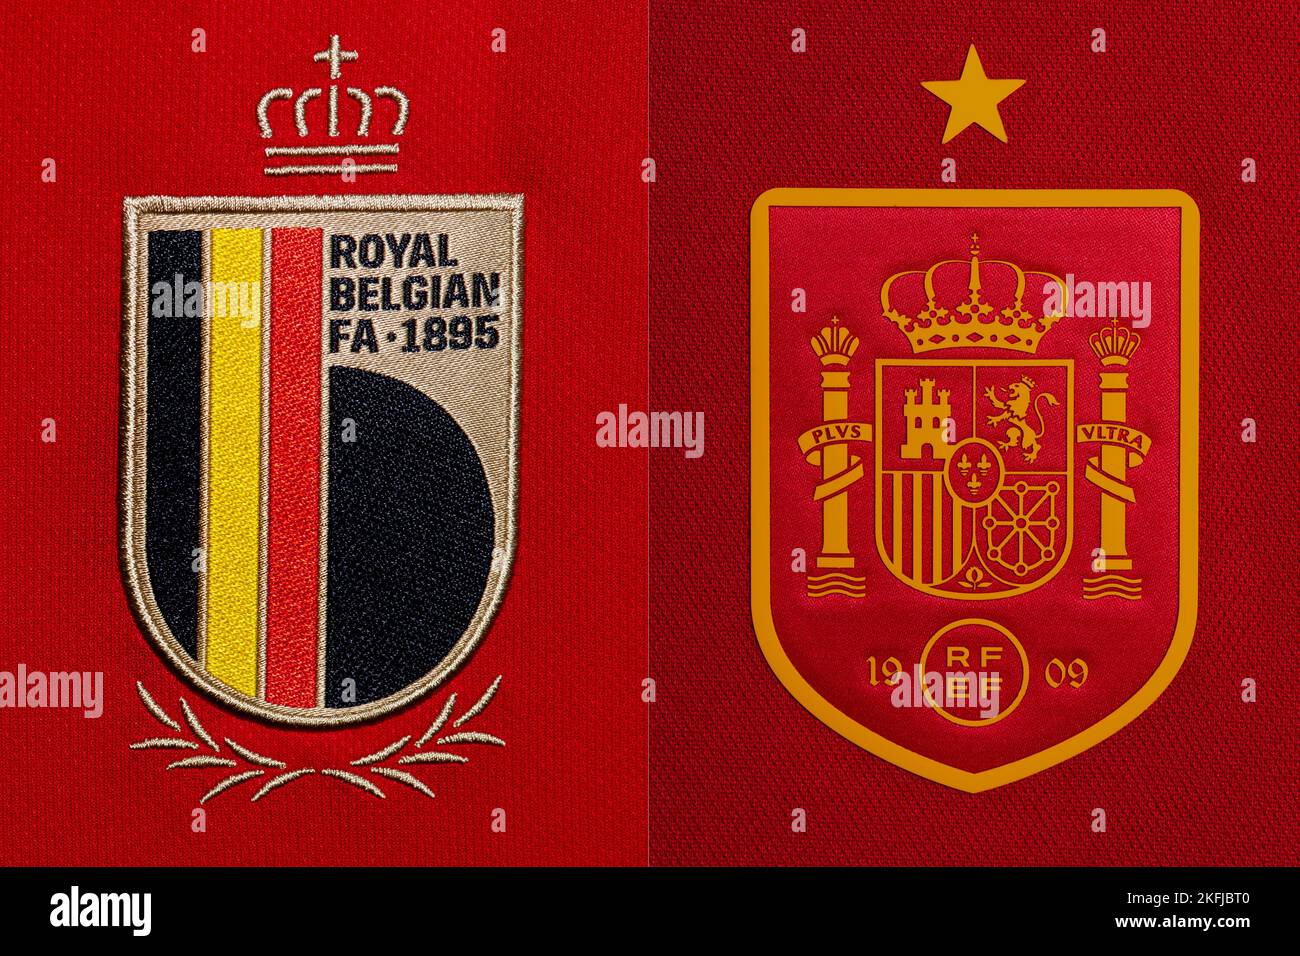 Royal dutch football logo hi-res stock photography and images - Alamy